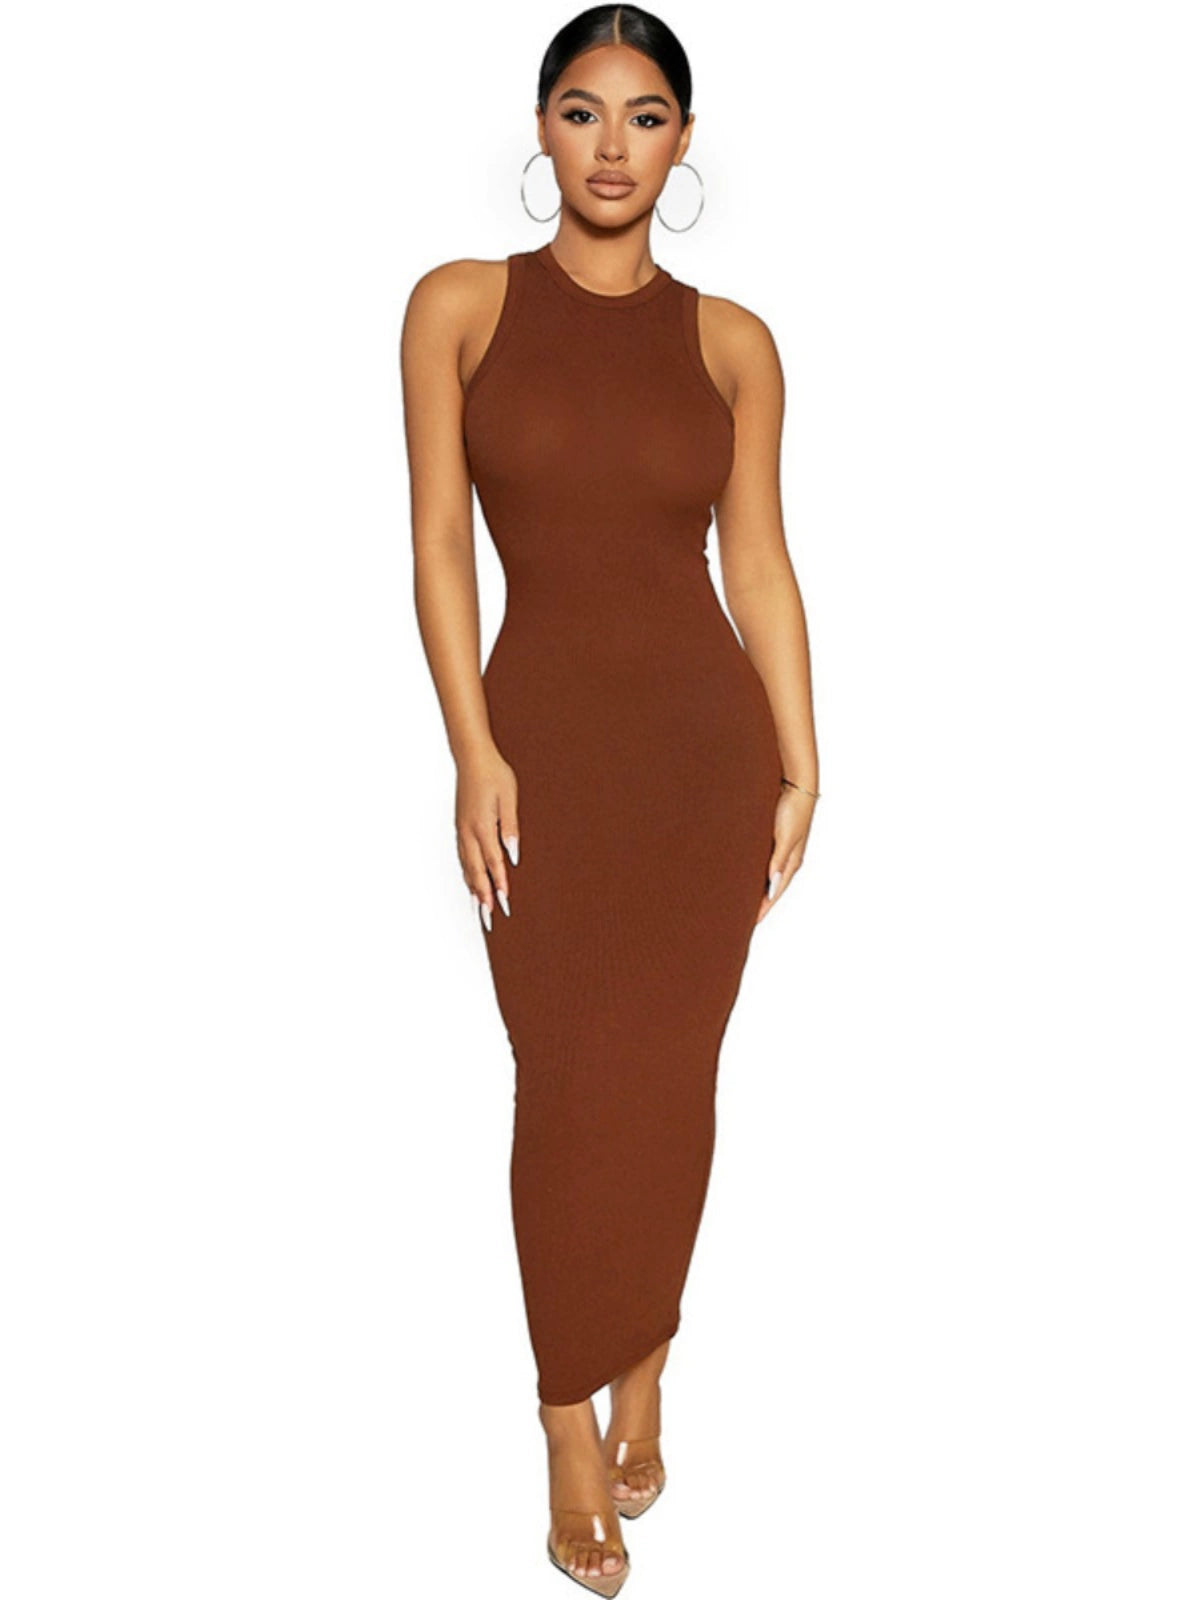 Ahagaga Elegant Sleeveless Maxi Dress: Sophisticated Style for Women